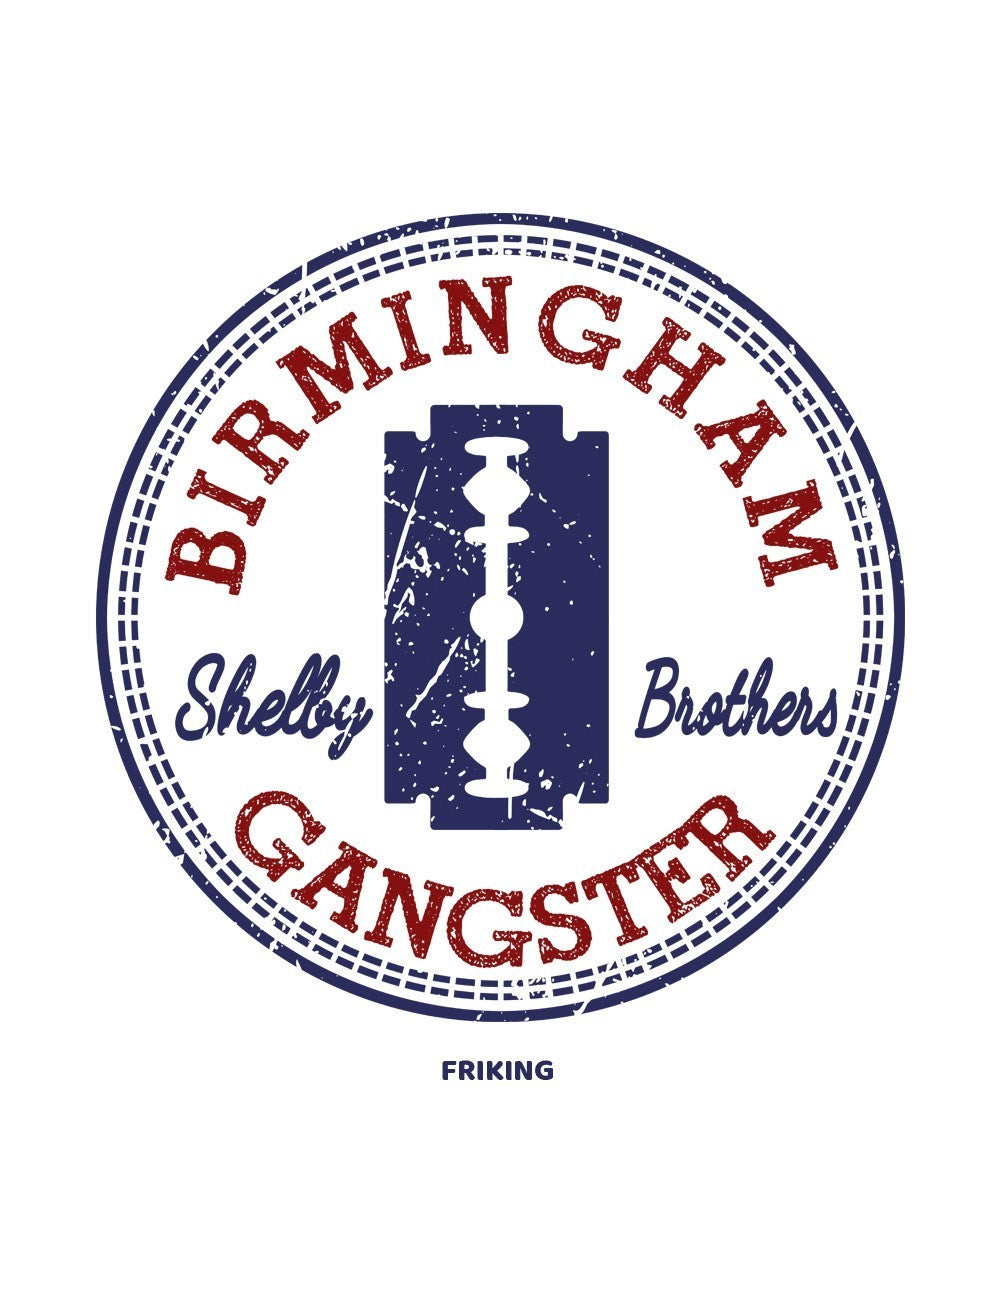  Birmingham Gangster 